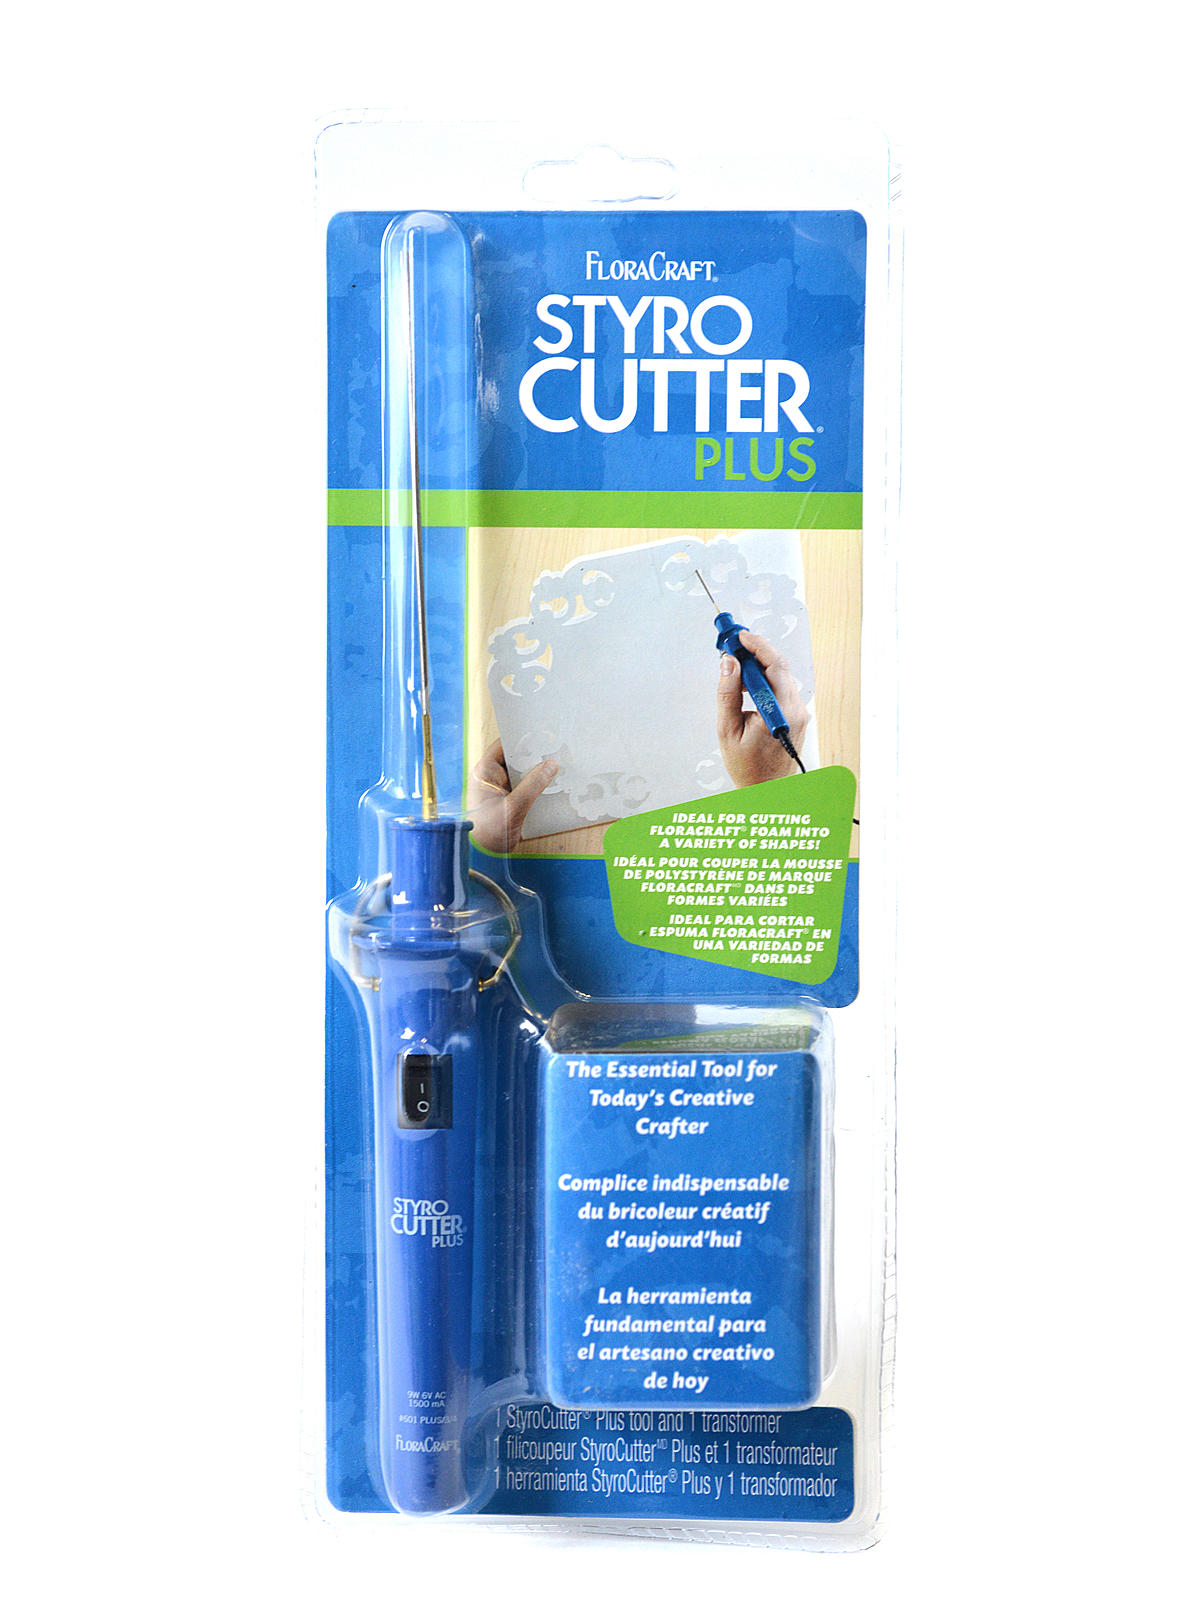 The Styro Wonder Cutter Plus Cutter